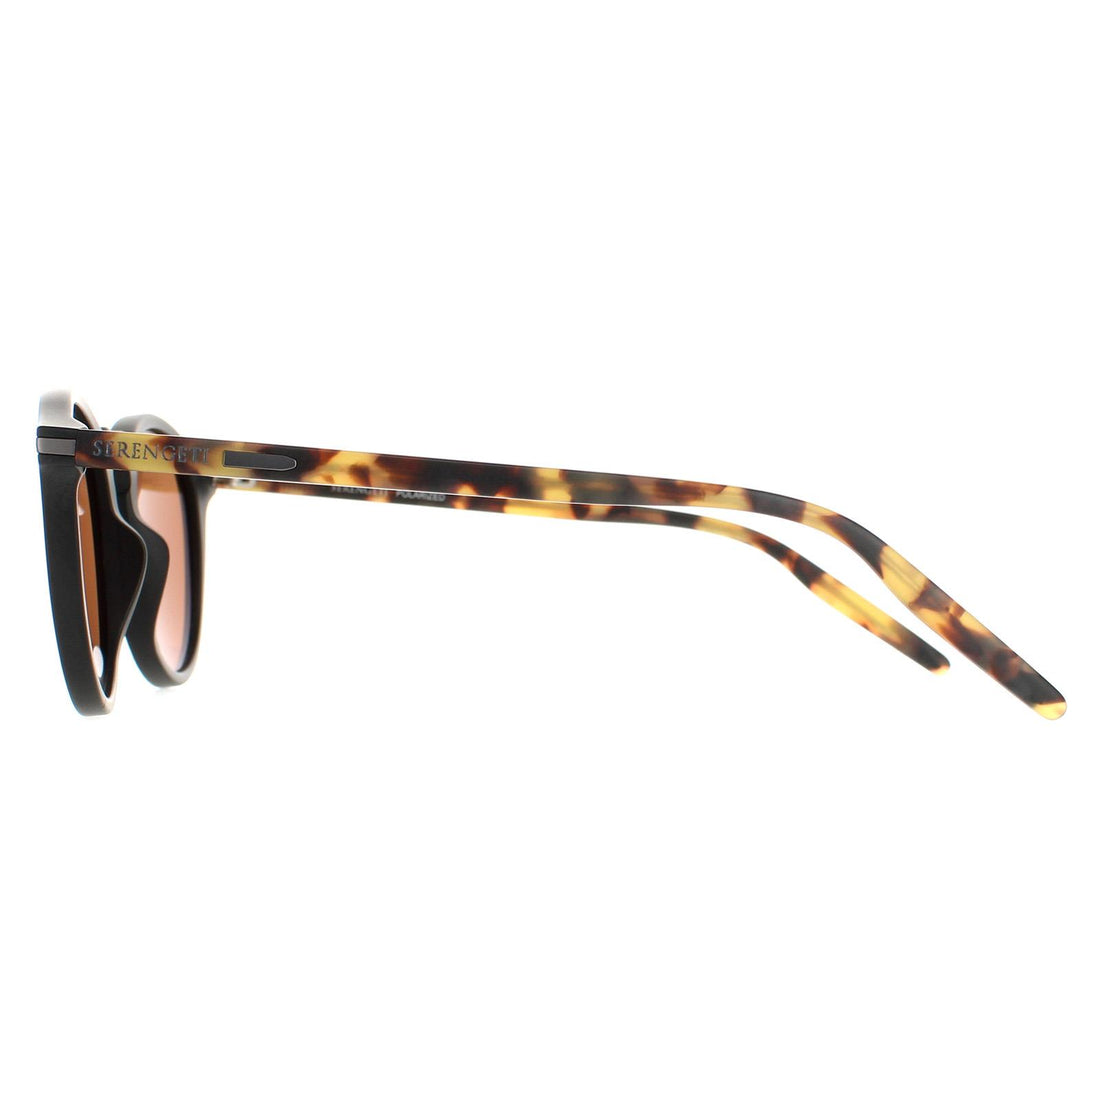 Serengeti Sunglasses Raffaele 8837 Black Mossy Oak Mineral Polarized Drivers Brown